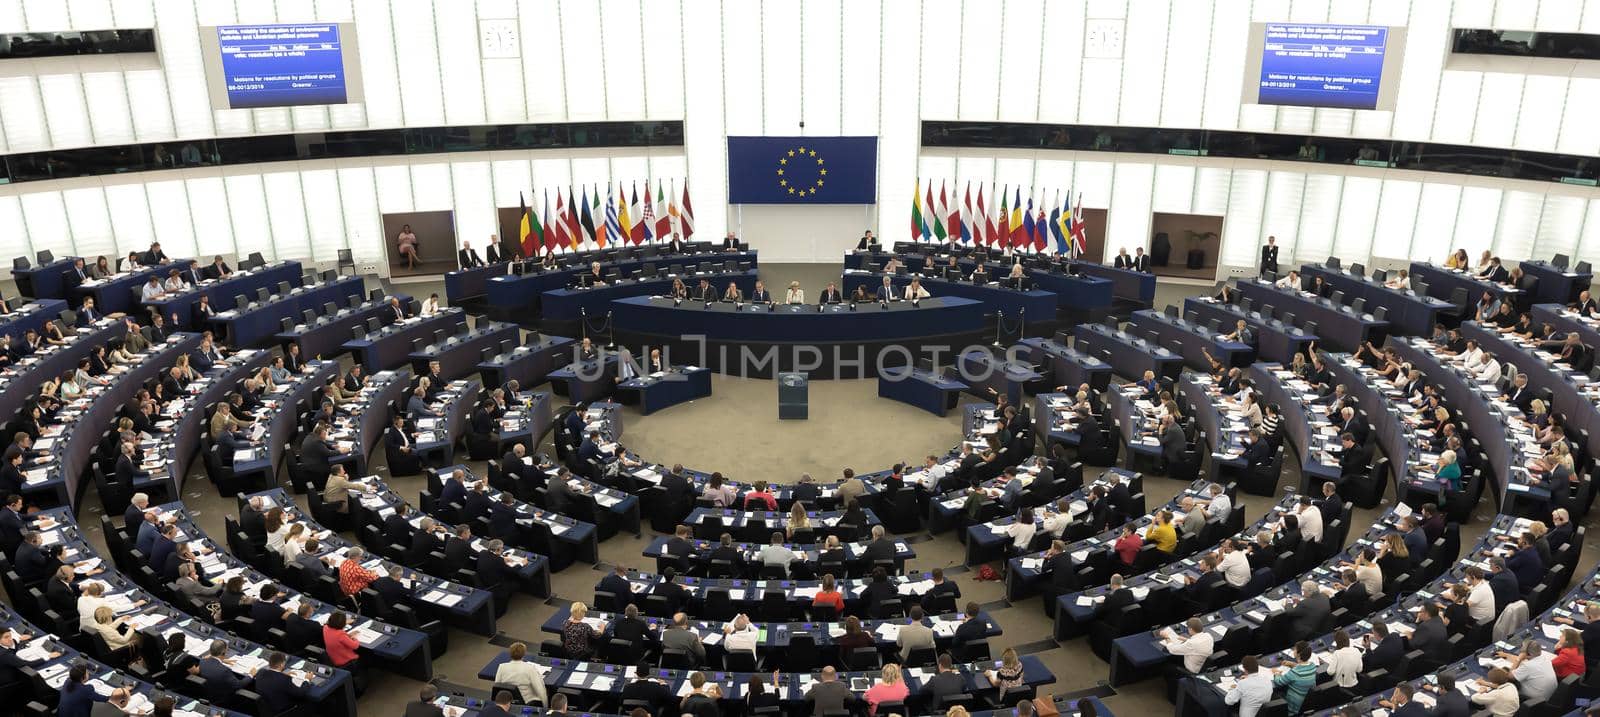 STRASBOURG, FRANCE - 18 Jul 2019: Plenary room of the European Parliament in Strasbourg